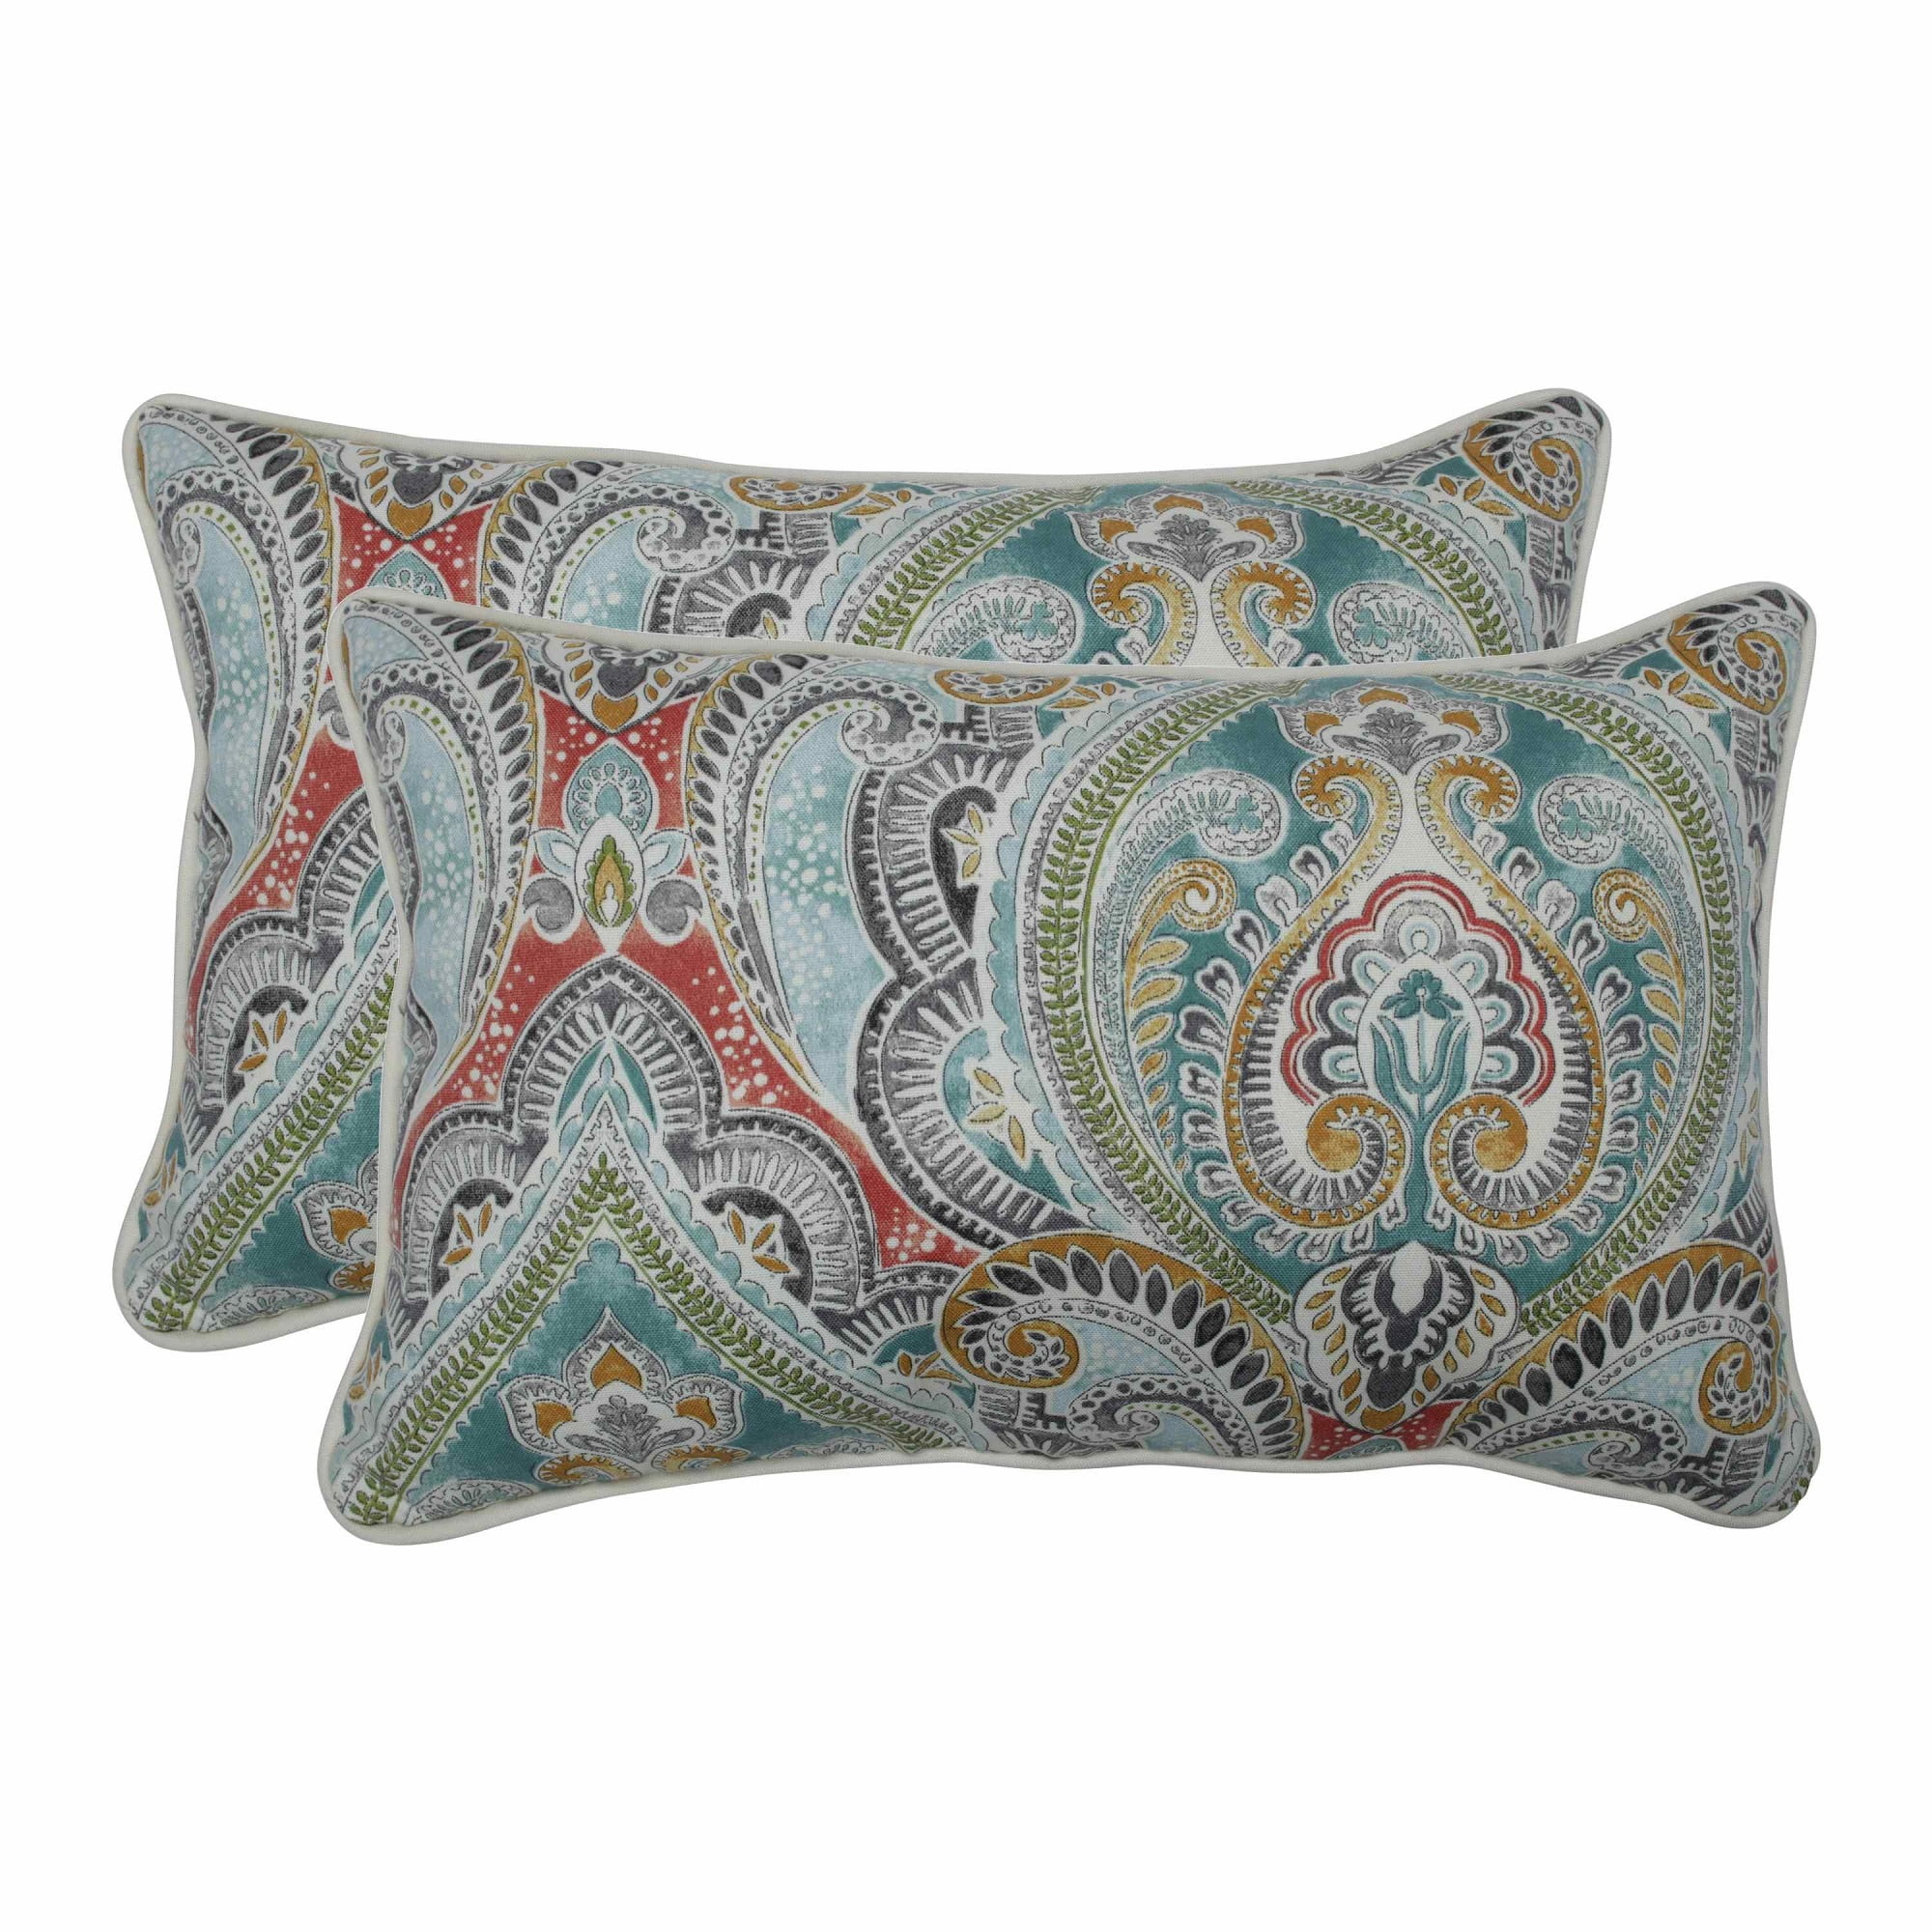 Set of 2 Vibrantly Colored Damask Pattern Rectangular Throw Pillows 18.5"